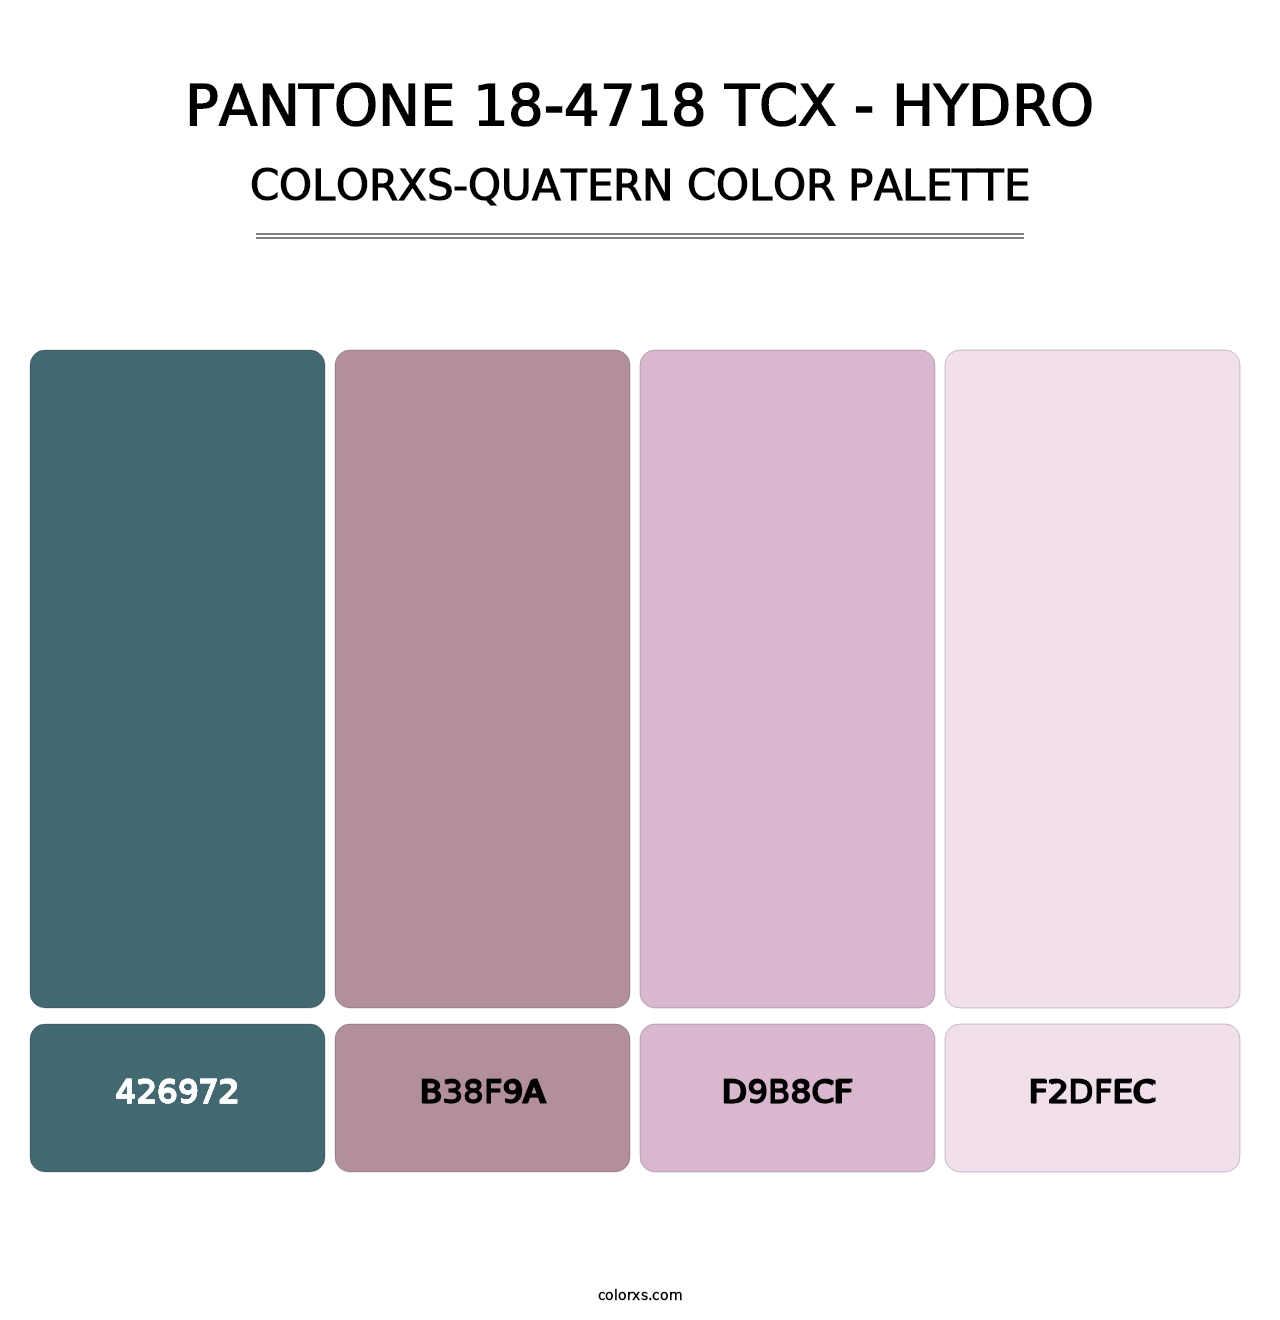 PANTONE 18-4718 TCX - Hydro - Colorxs Quatern Palette